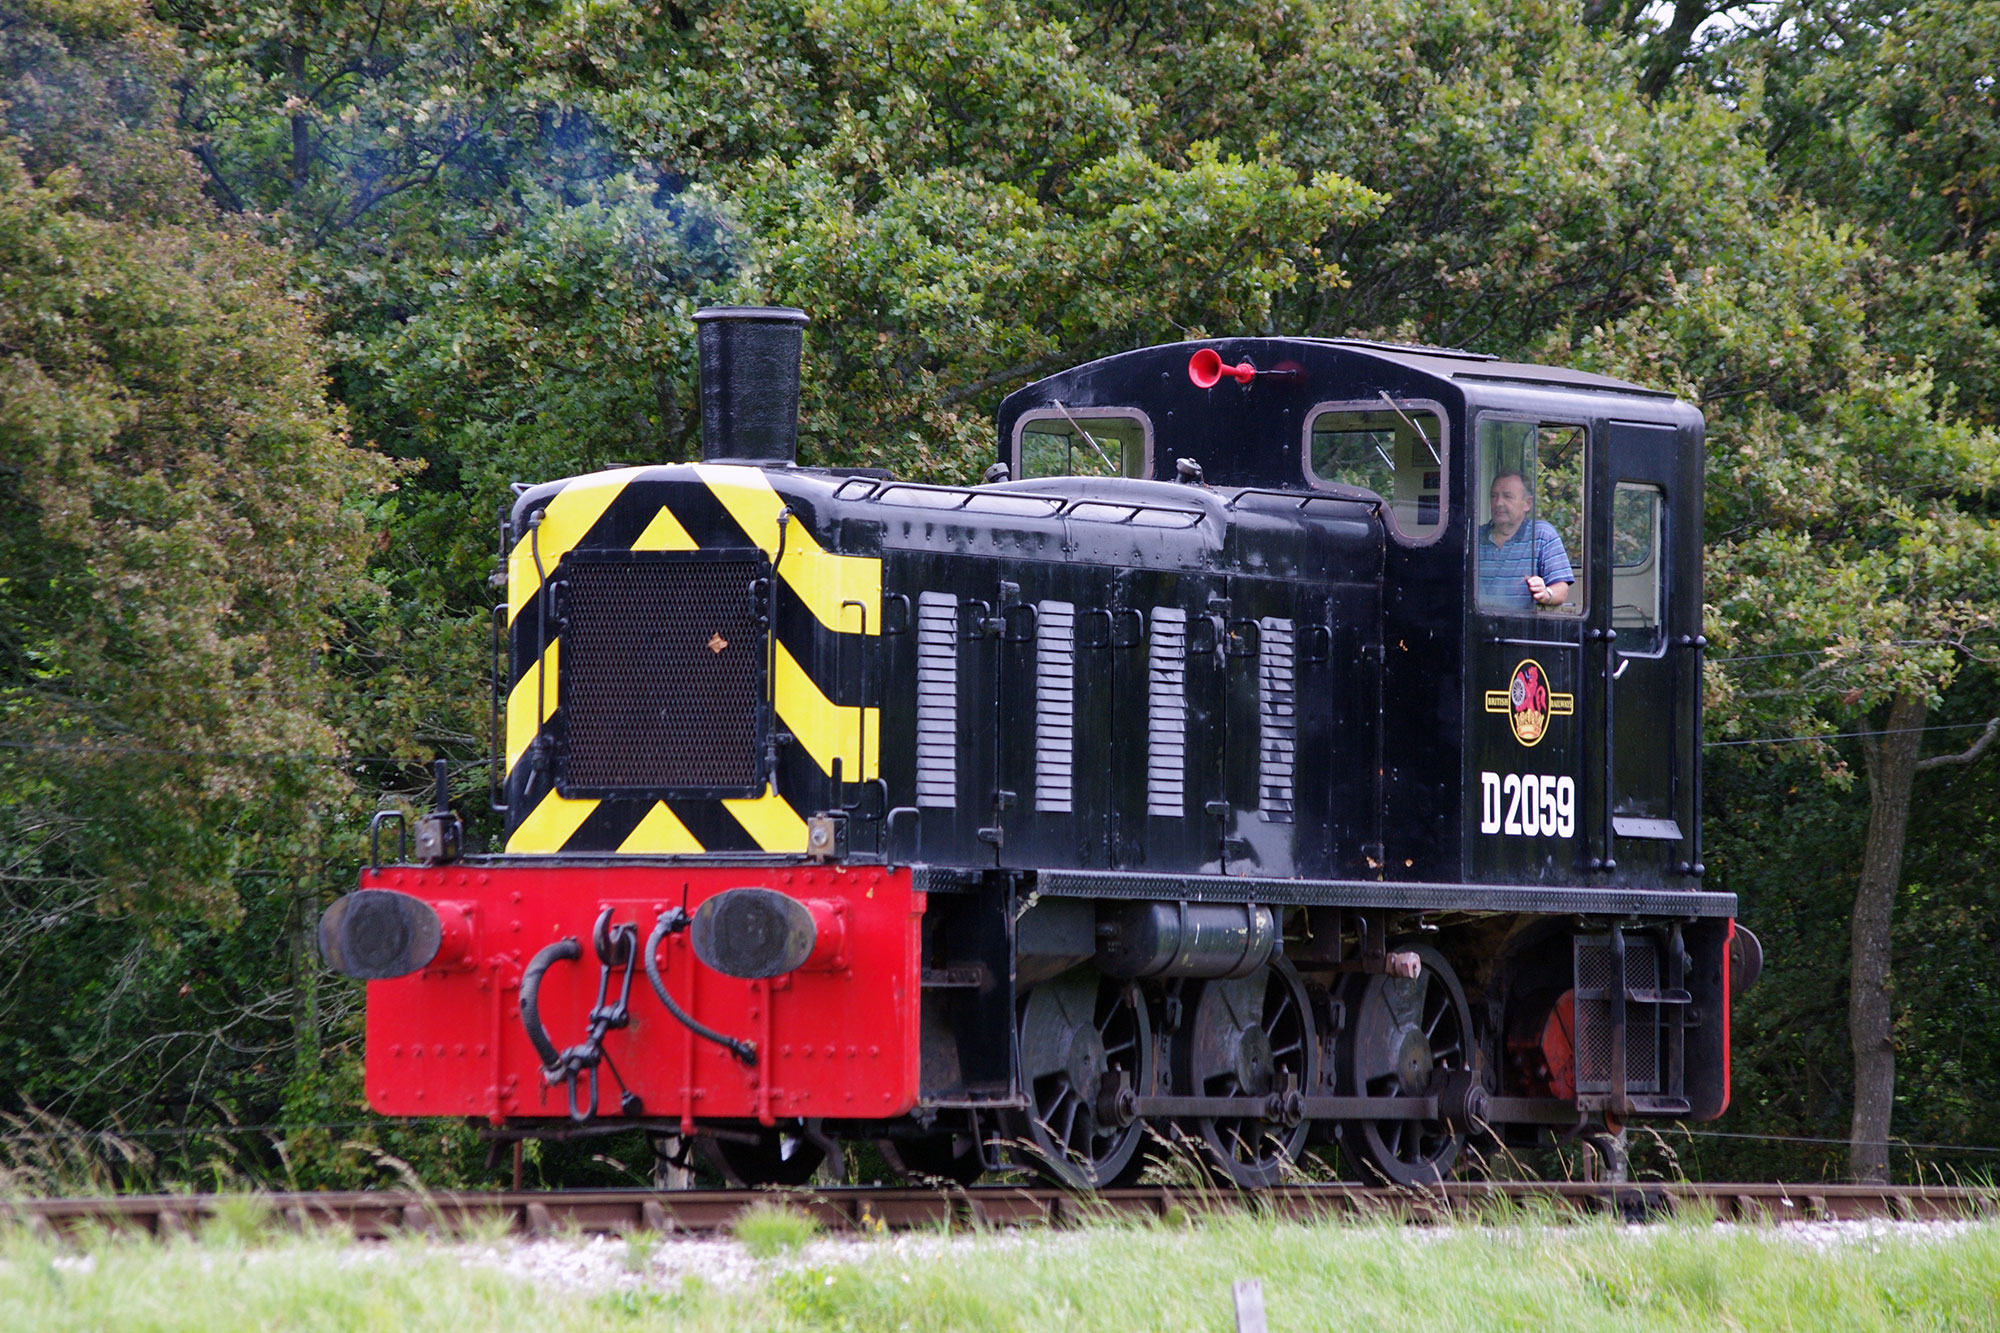 British Railways Class 03 No D2059